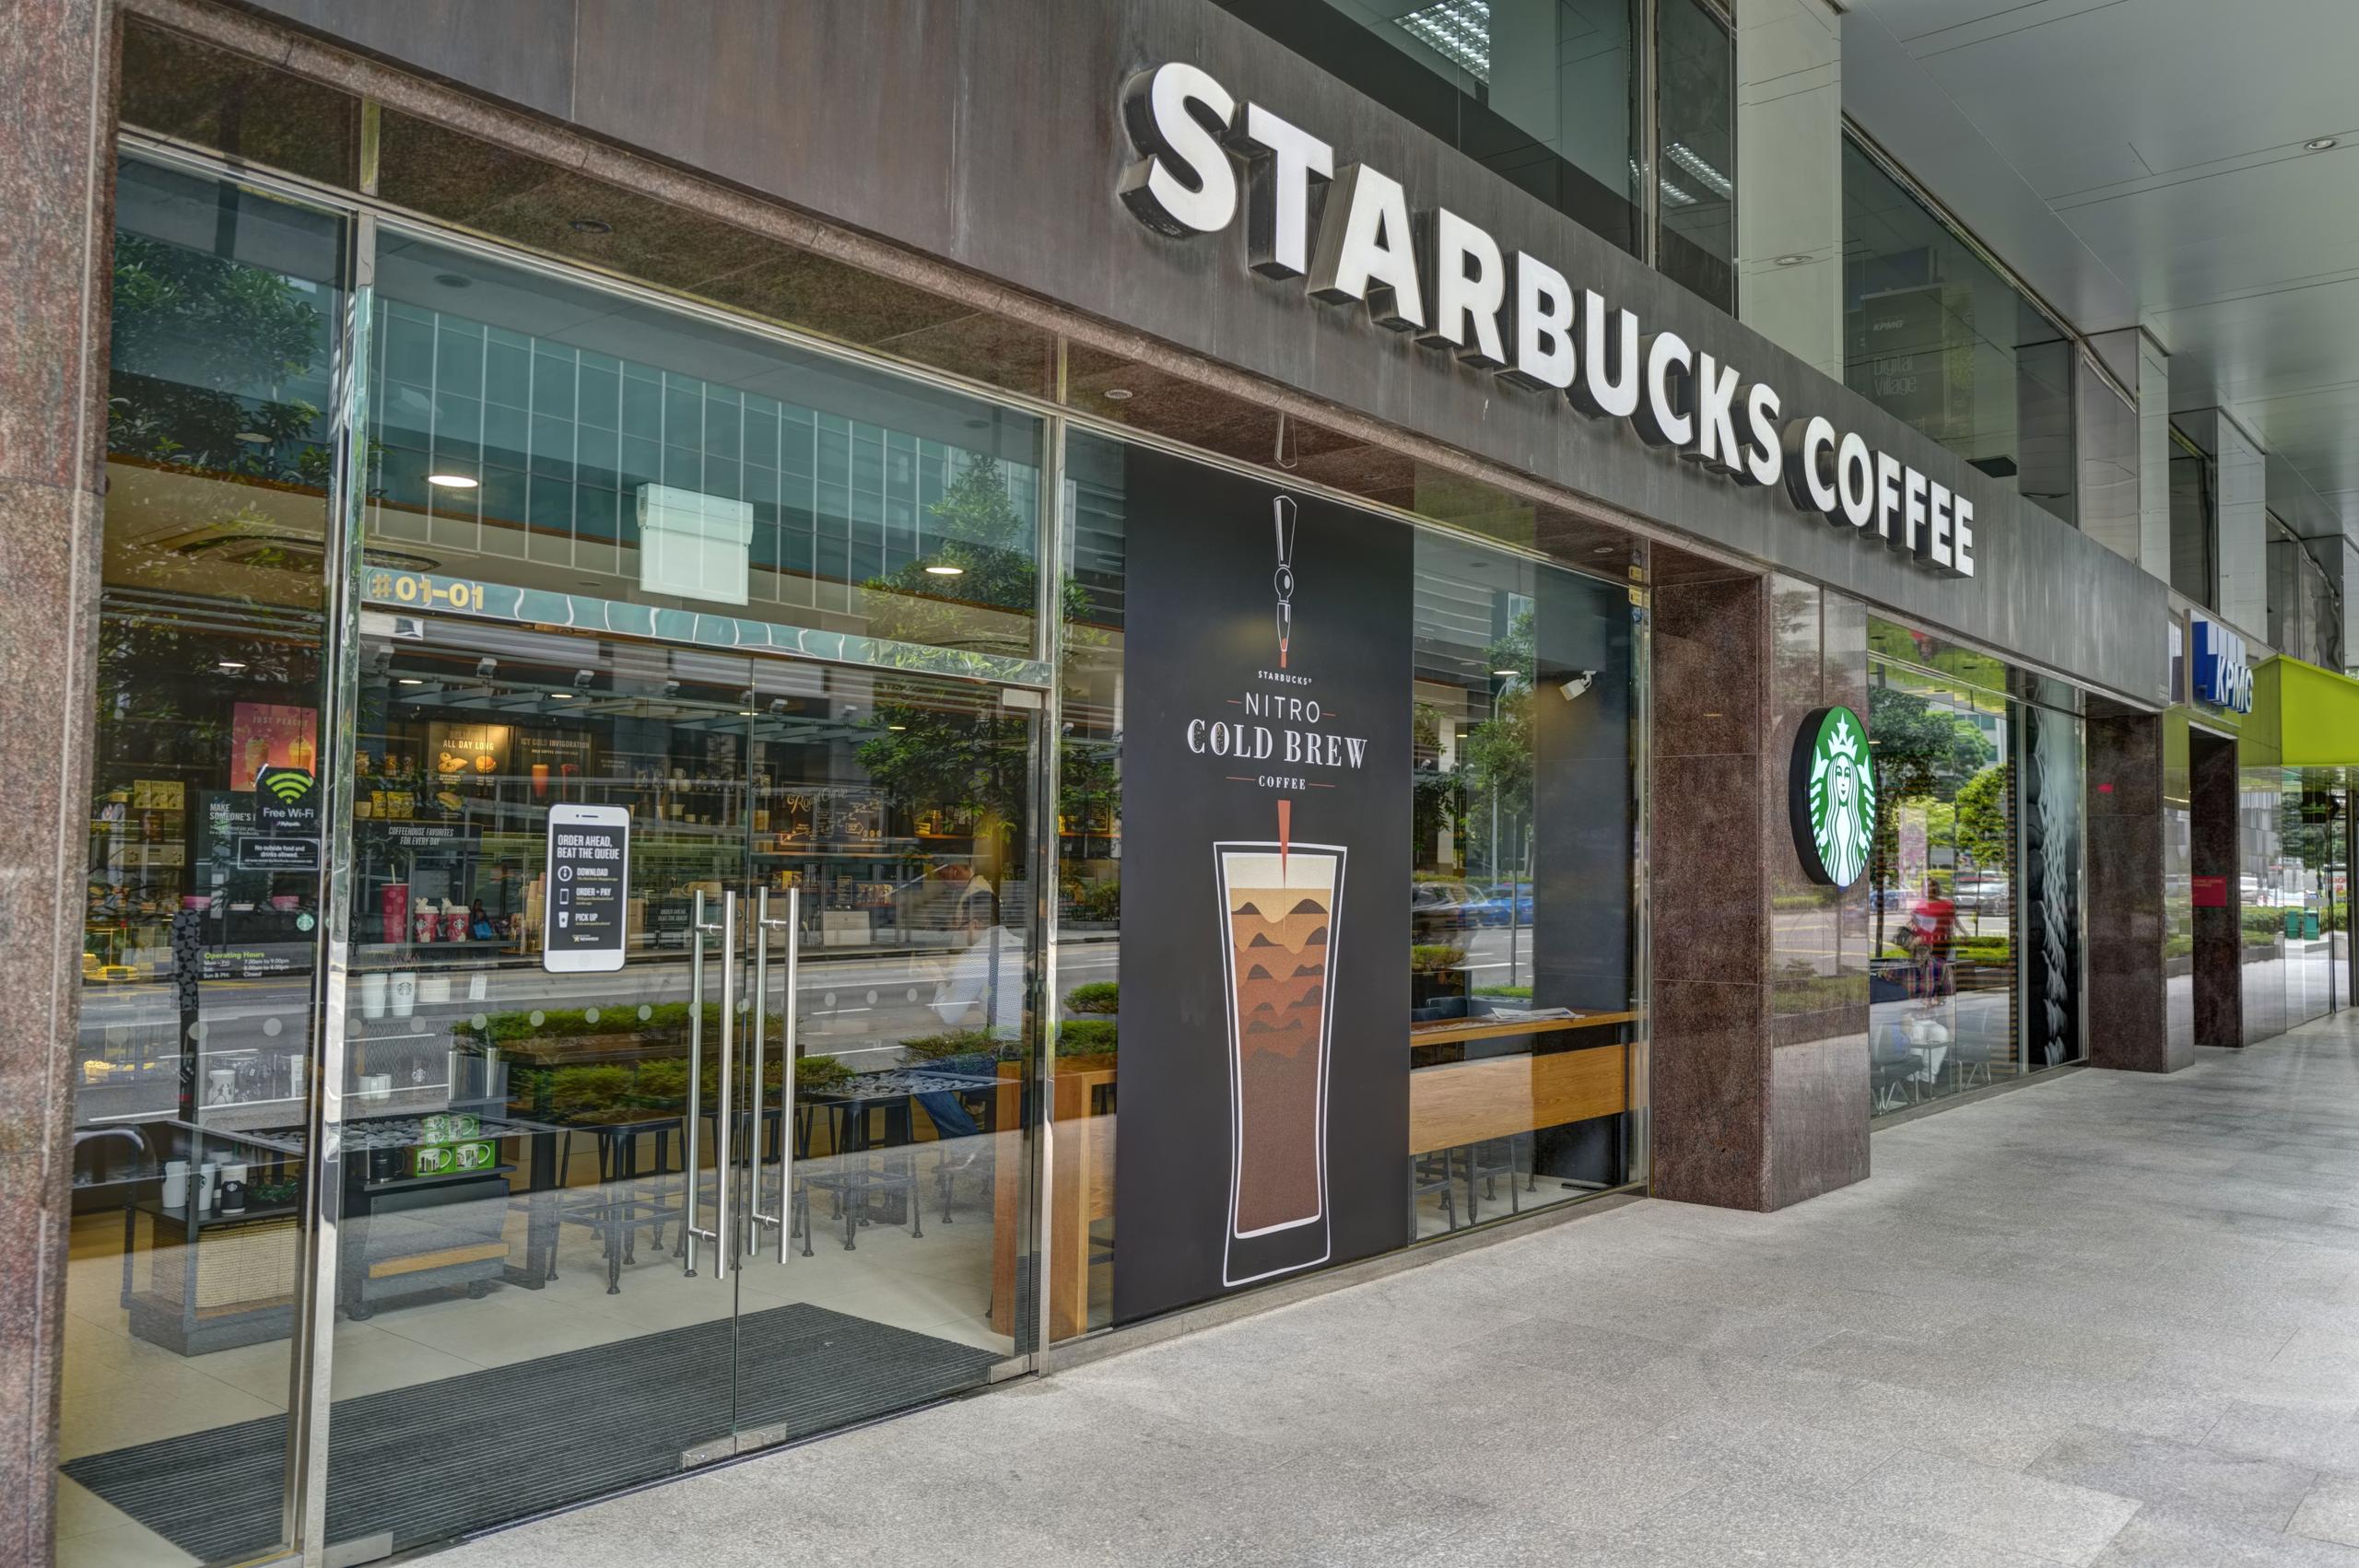 GEGGUS Entrance Matting installed at Starbucks Coffee